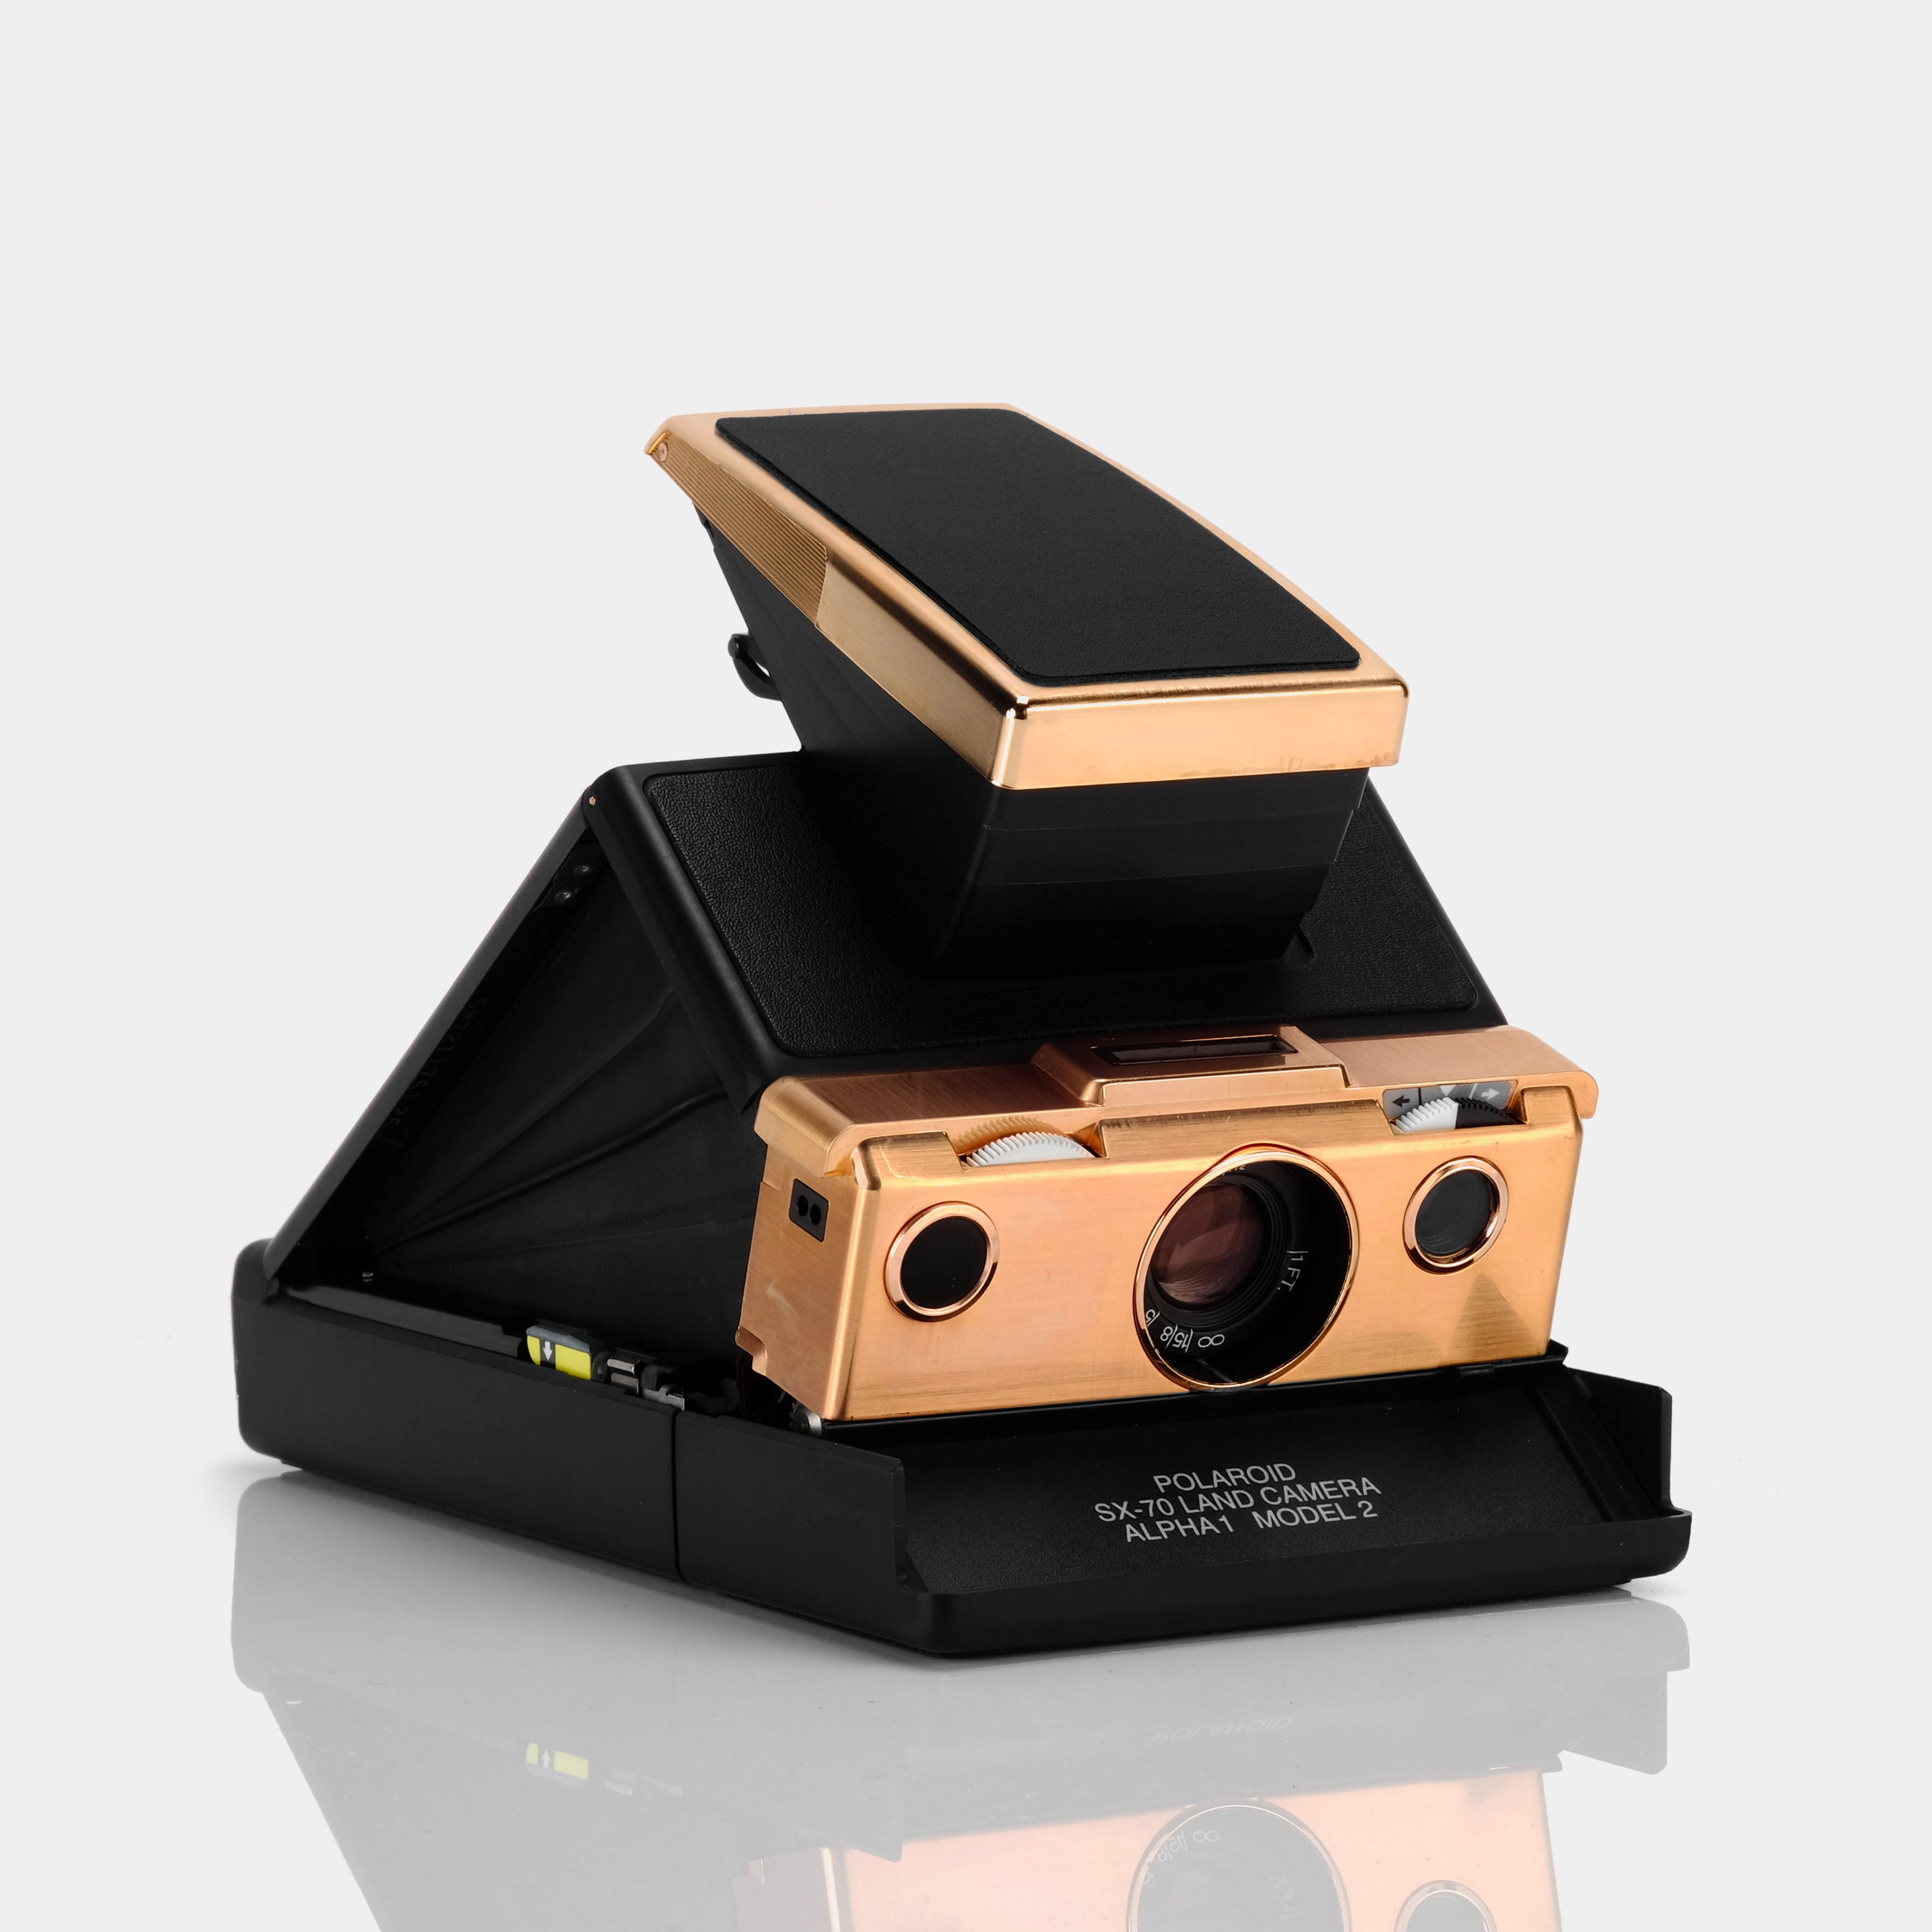 Polaroid SX-70 Alpha 1 Model 2 Black with Rose Gold Folding Instant Film  Camera